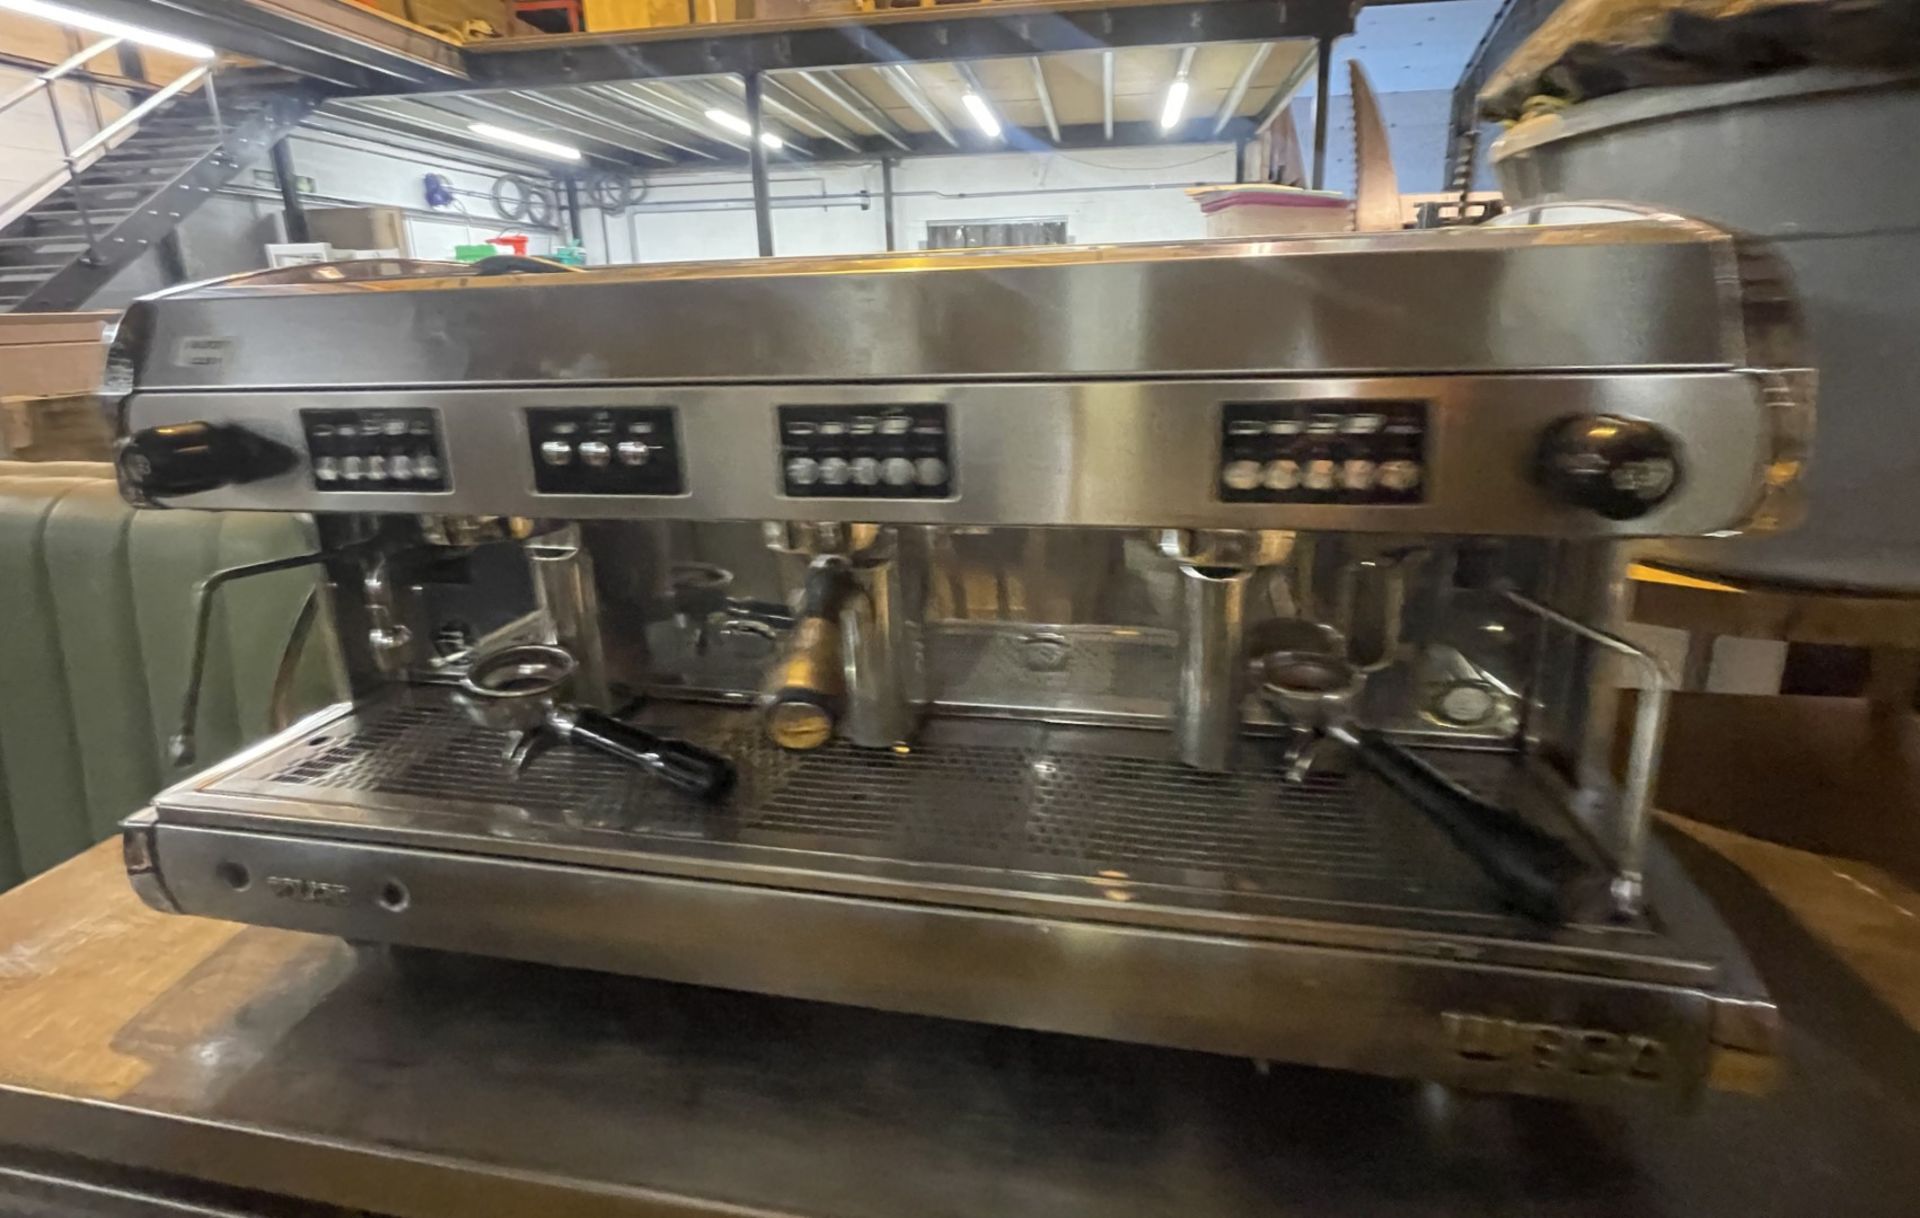 1 x Polaris Wega 3 Group Commercial Espresso Coffee Machine - Stainless Steel Exterior - 3 Phase - Image 10 of 14